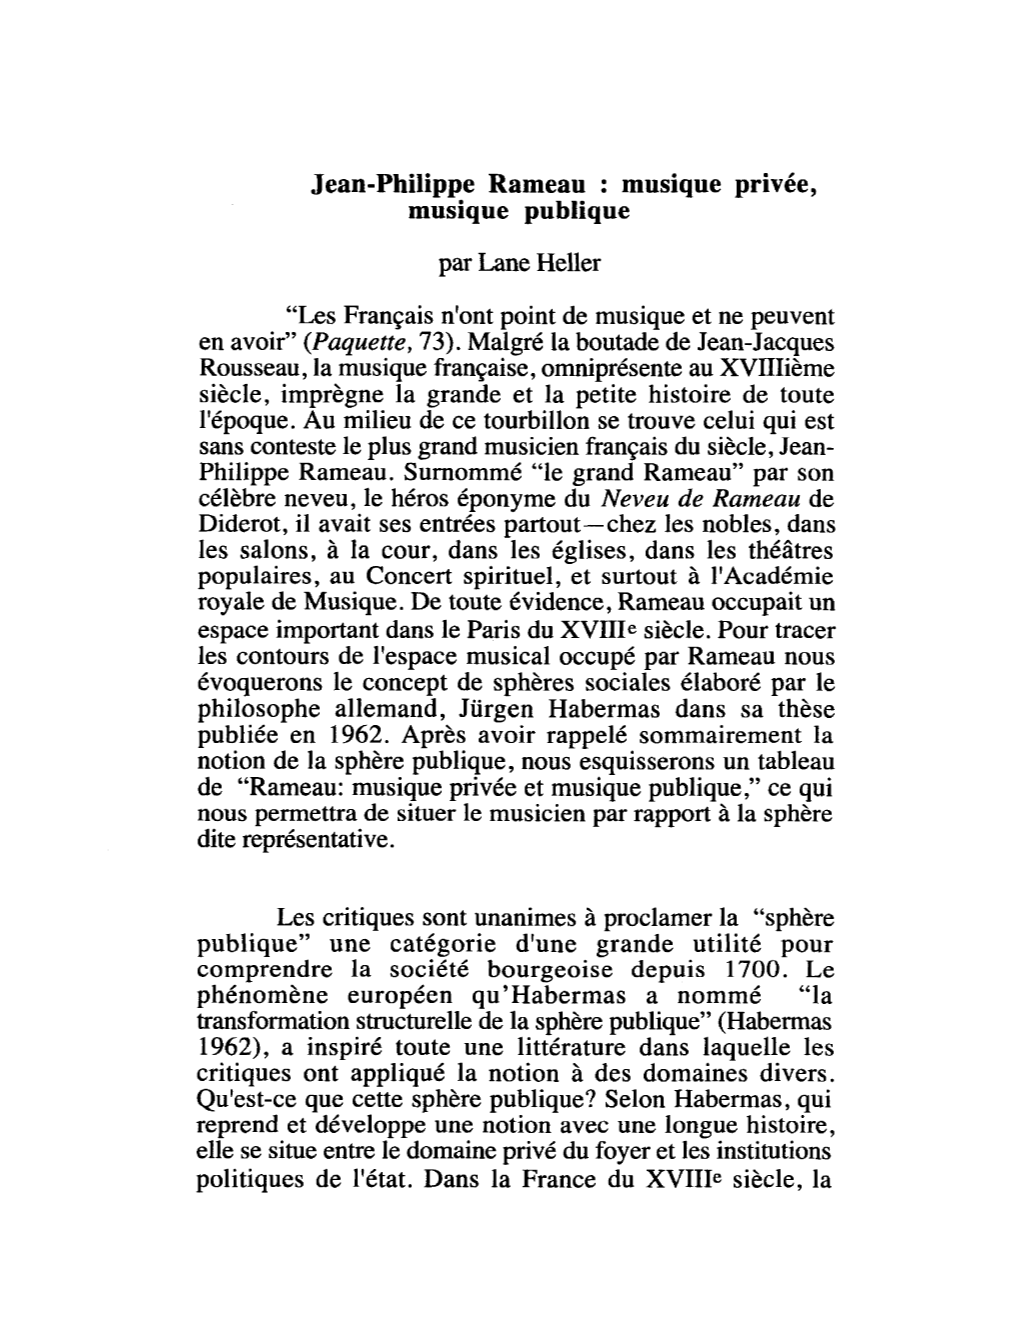 Jean-Philippe Rameau : Musique Privee, Musique Puhlique